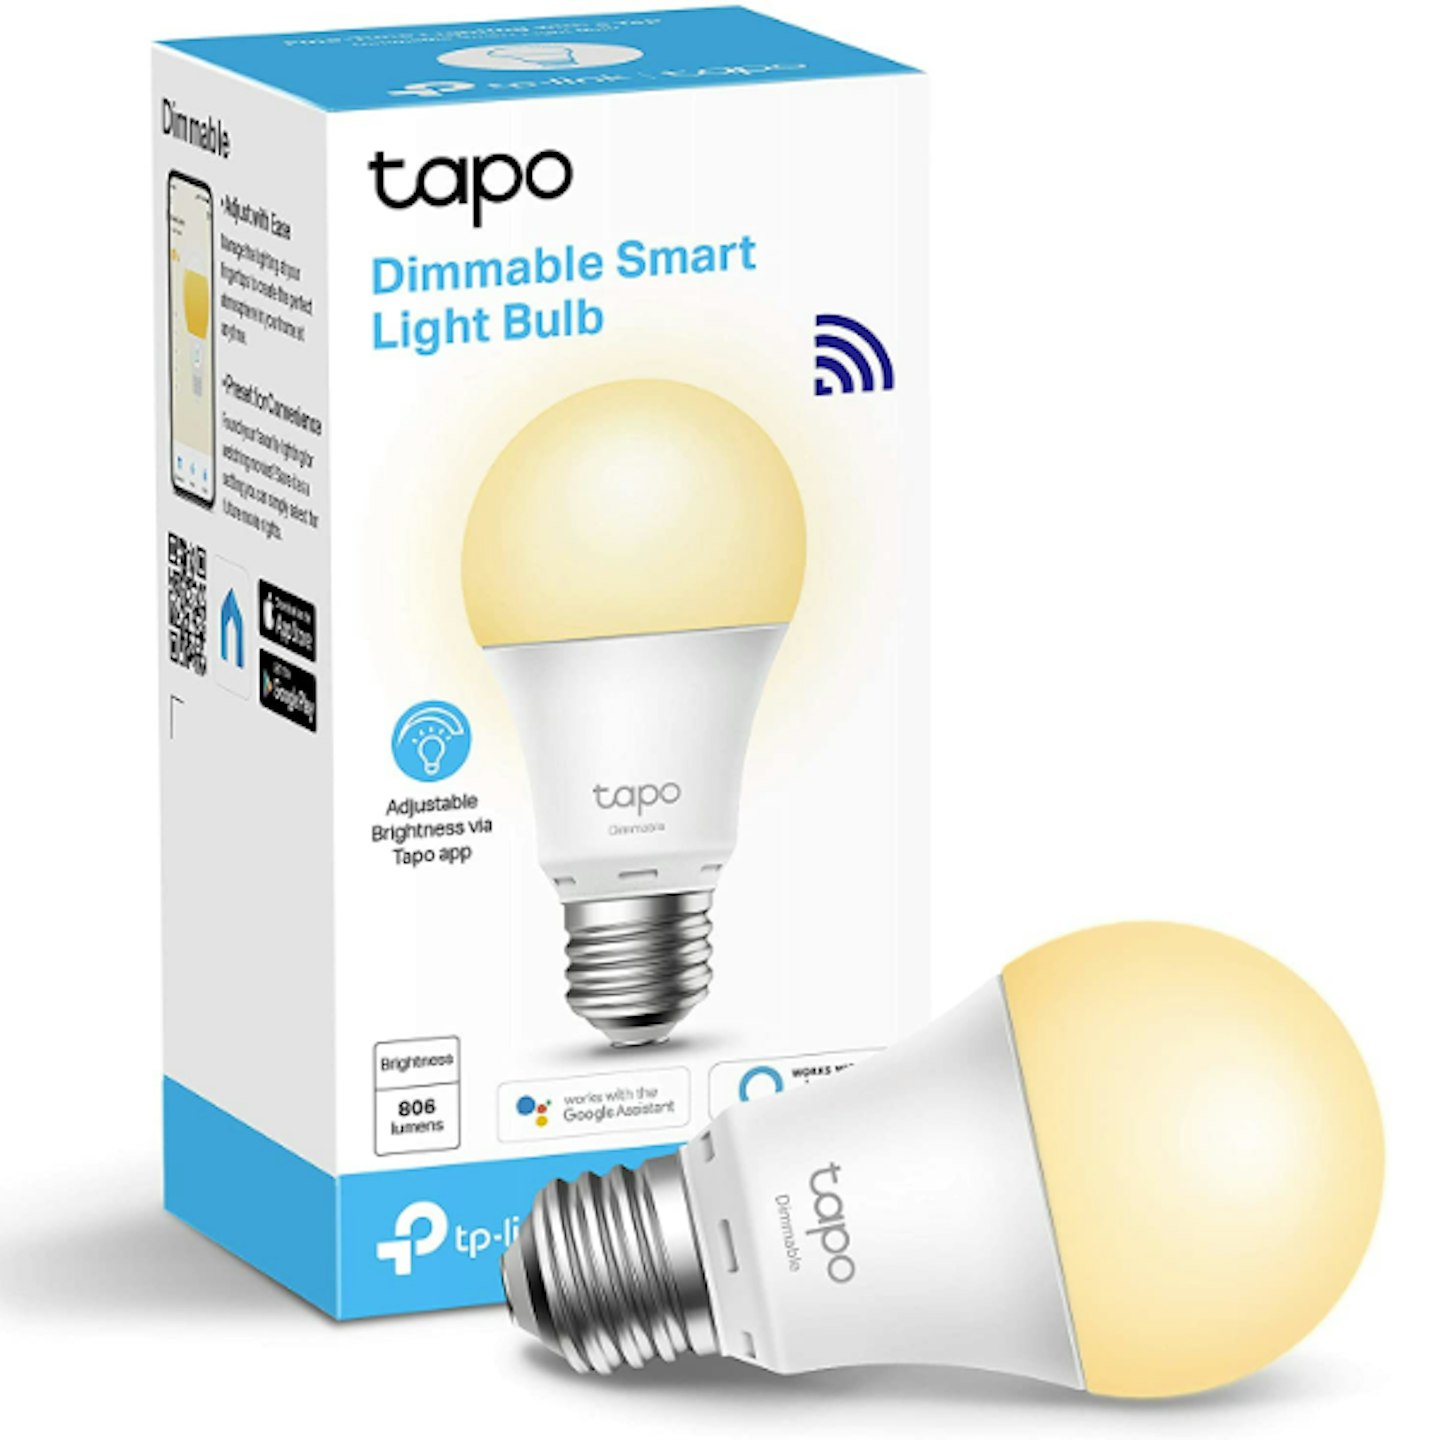 TP-Link Tapo Smart Bulb